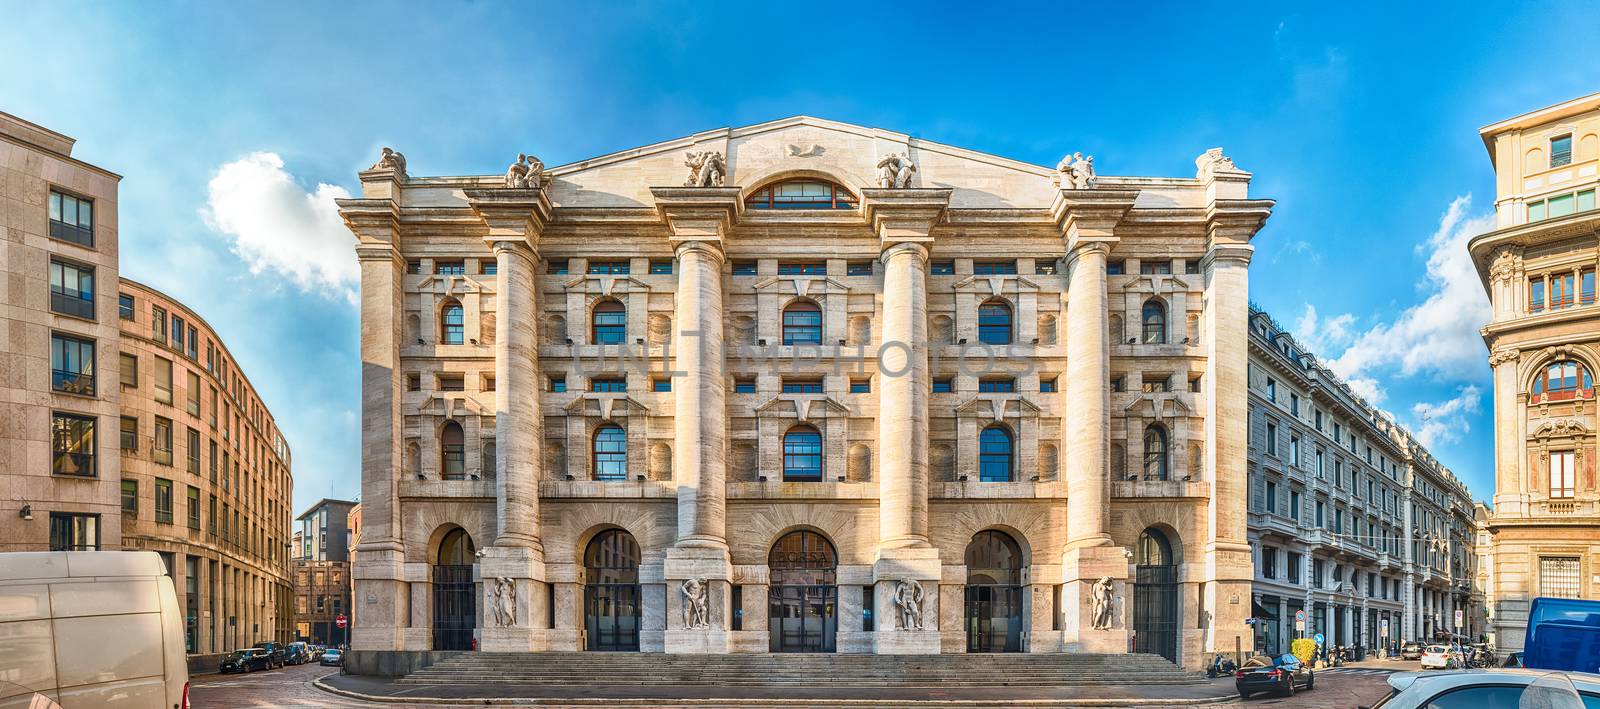 Facade of Palazzo Mezzanotte, stock exchange building in Milan,  by marcorubino